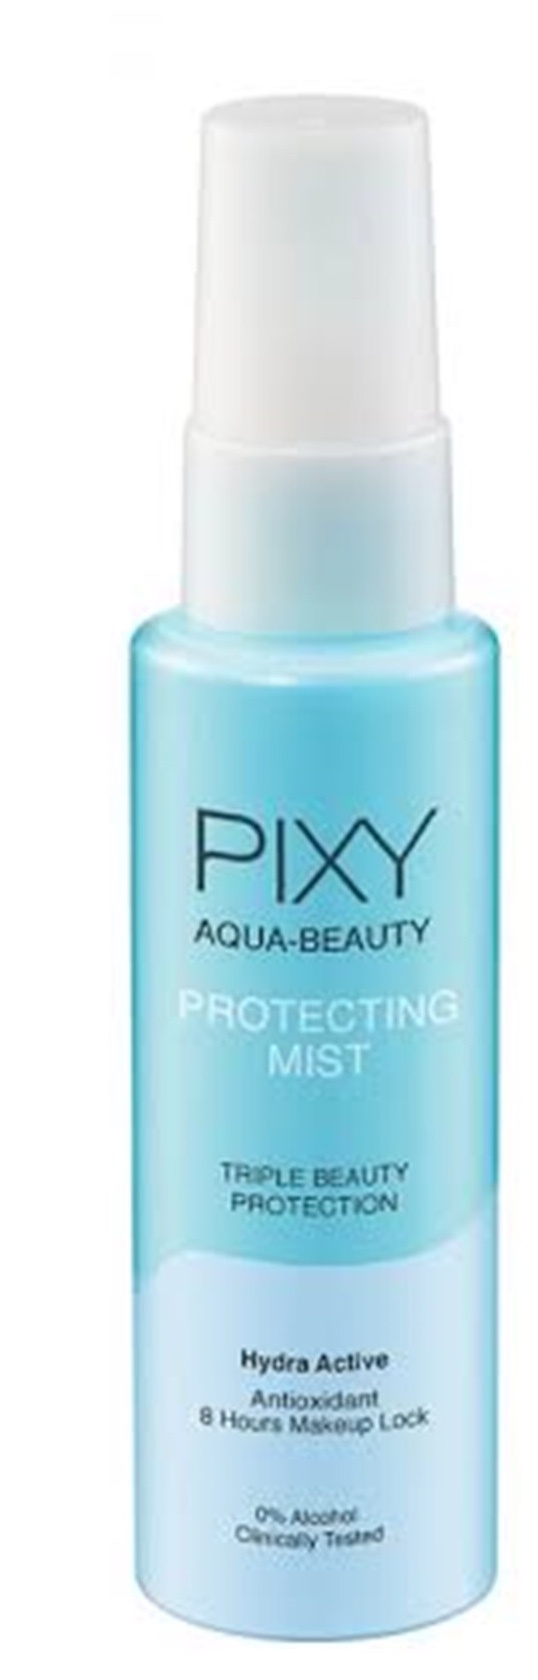 Pixy Aqua Beauty Protecting Mist 0% Alcohol